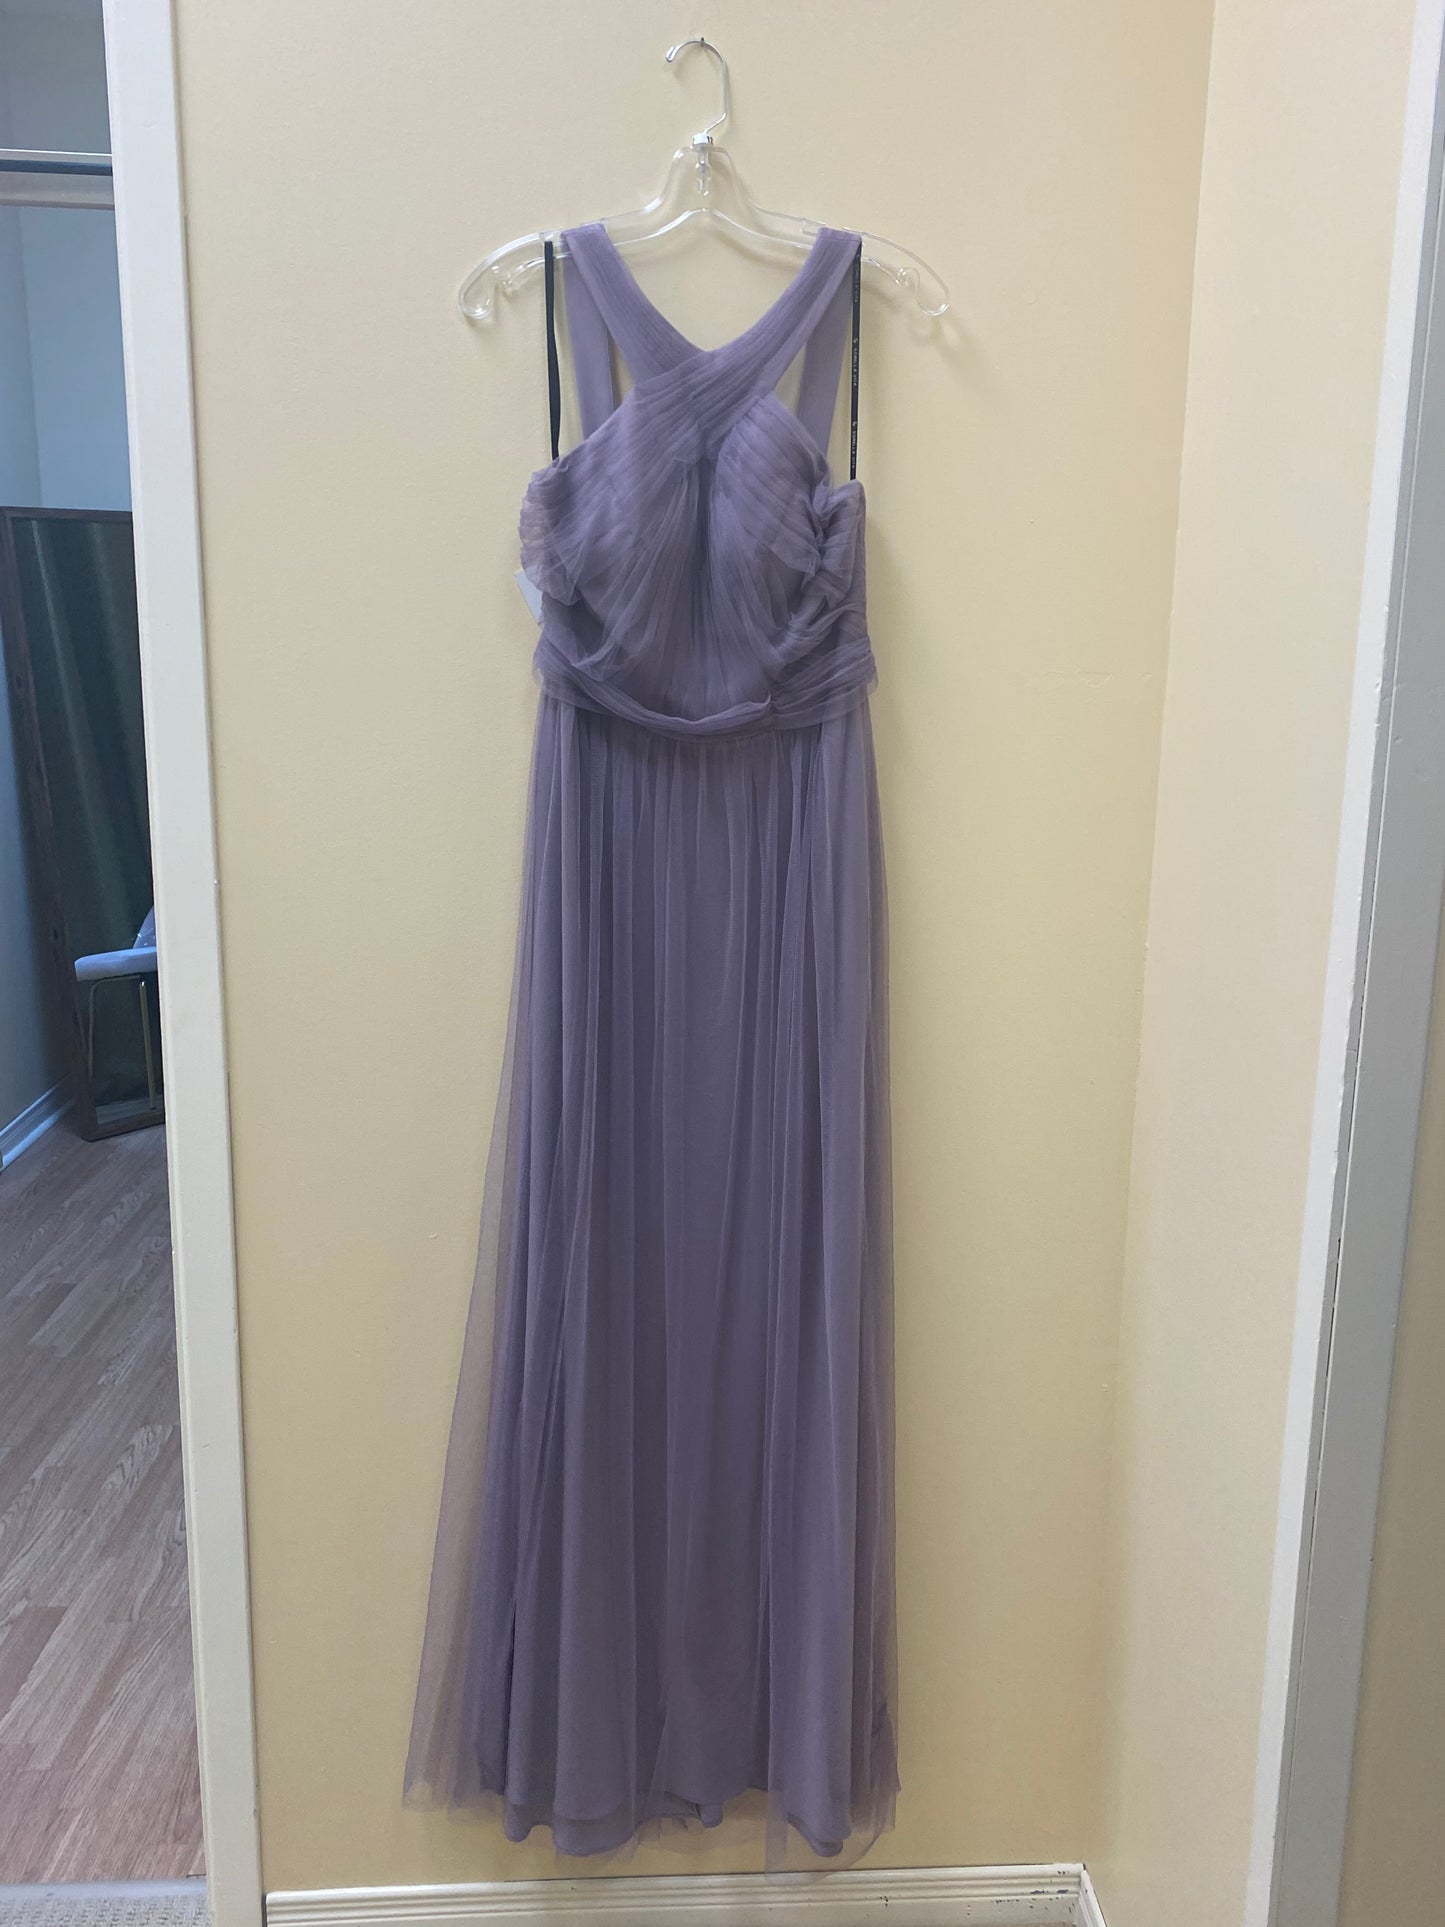 SORELLA VITA - 8828 - Thisle Size 12 Long Prom / Mother of the Bride / Bridesmaid Dress